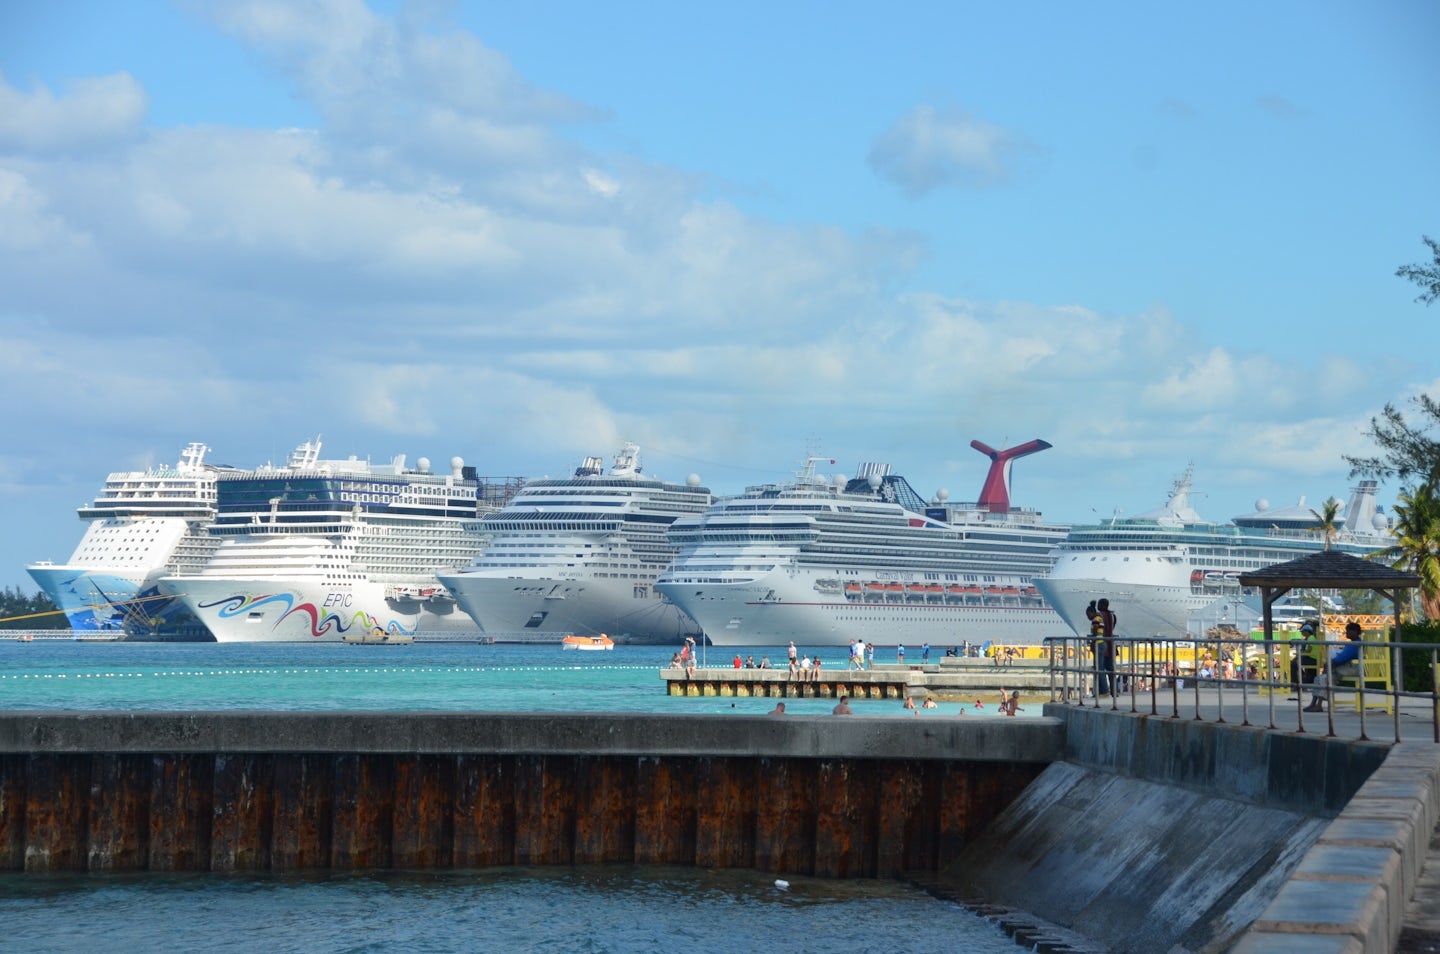 All ship in Nassau harbor